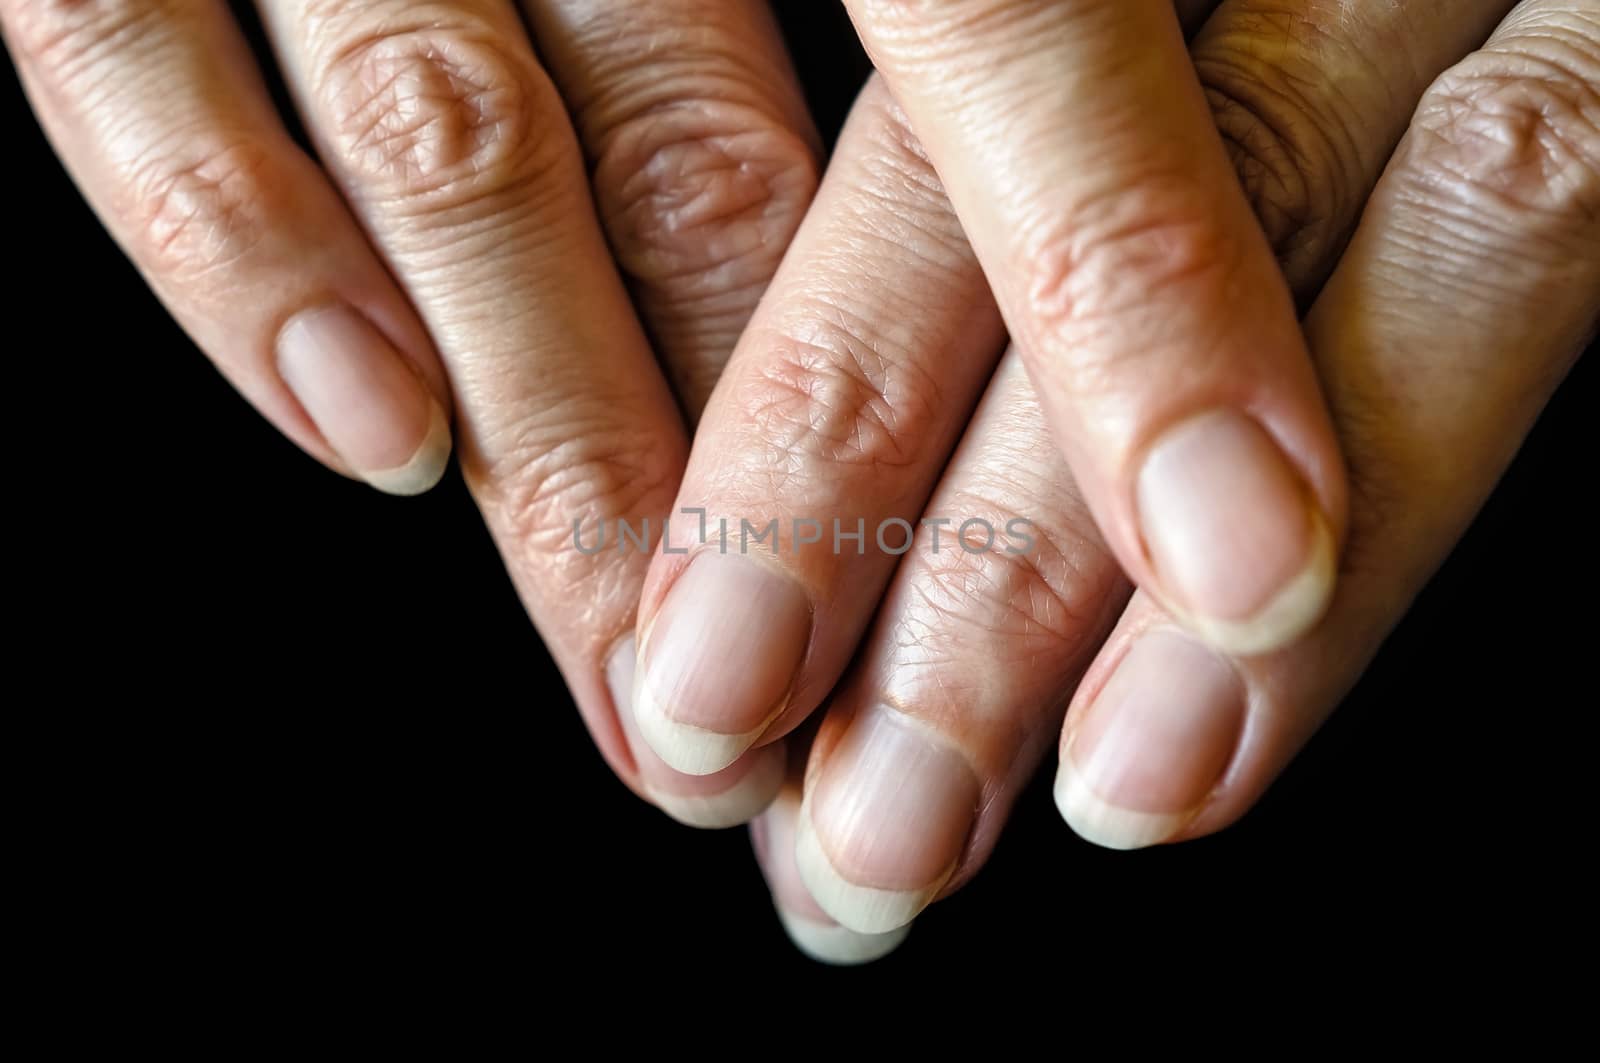 Woman's Fingers by MaxalTamor